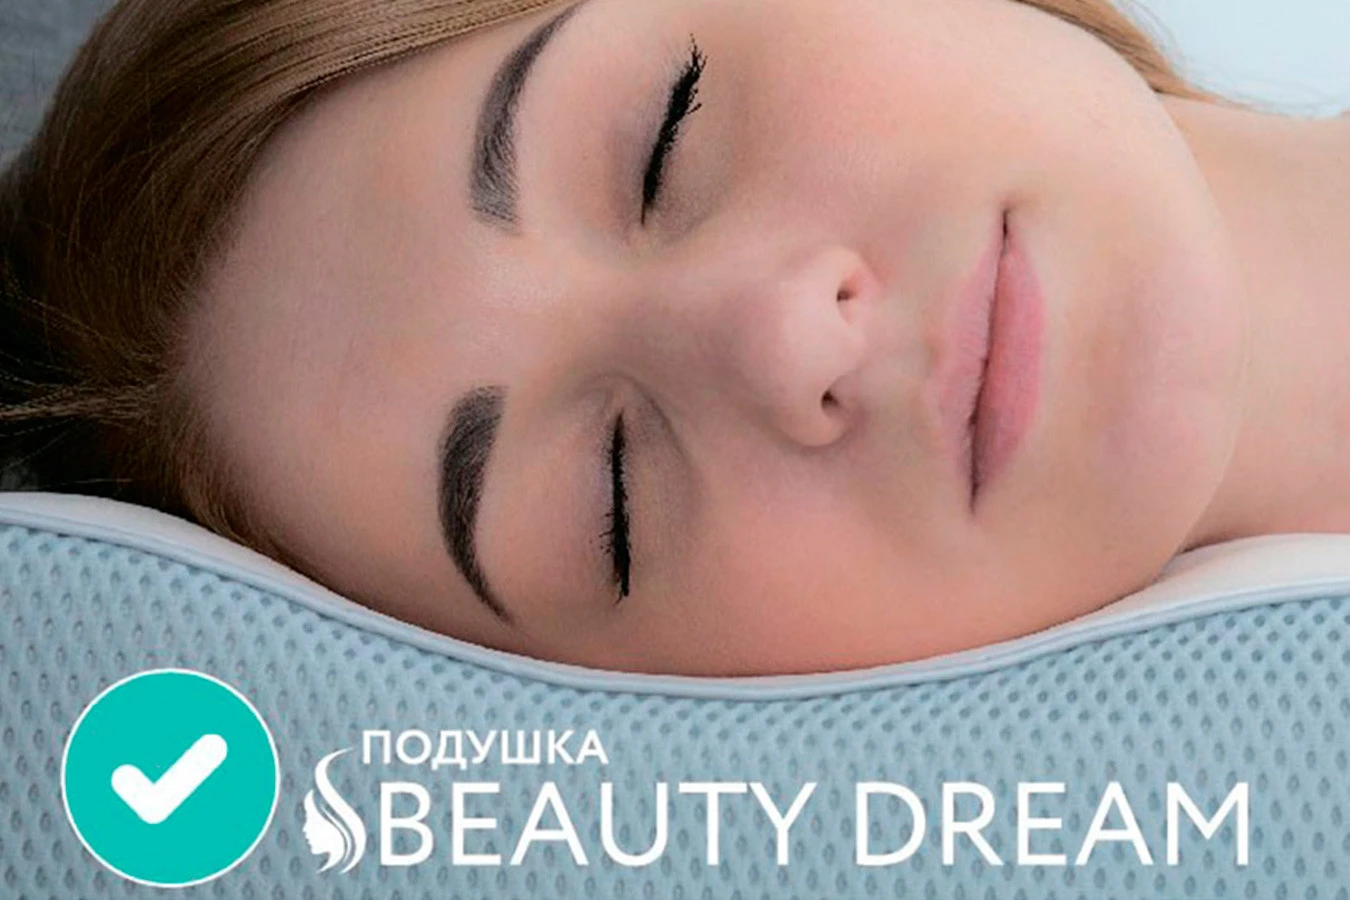 Подушка Beauty Dream картинка - 5 - большое изображение